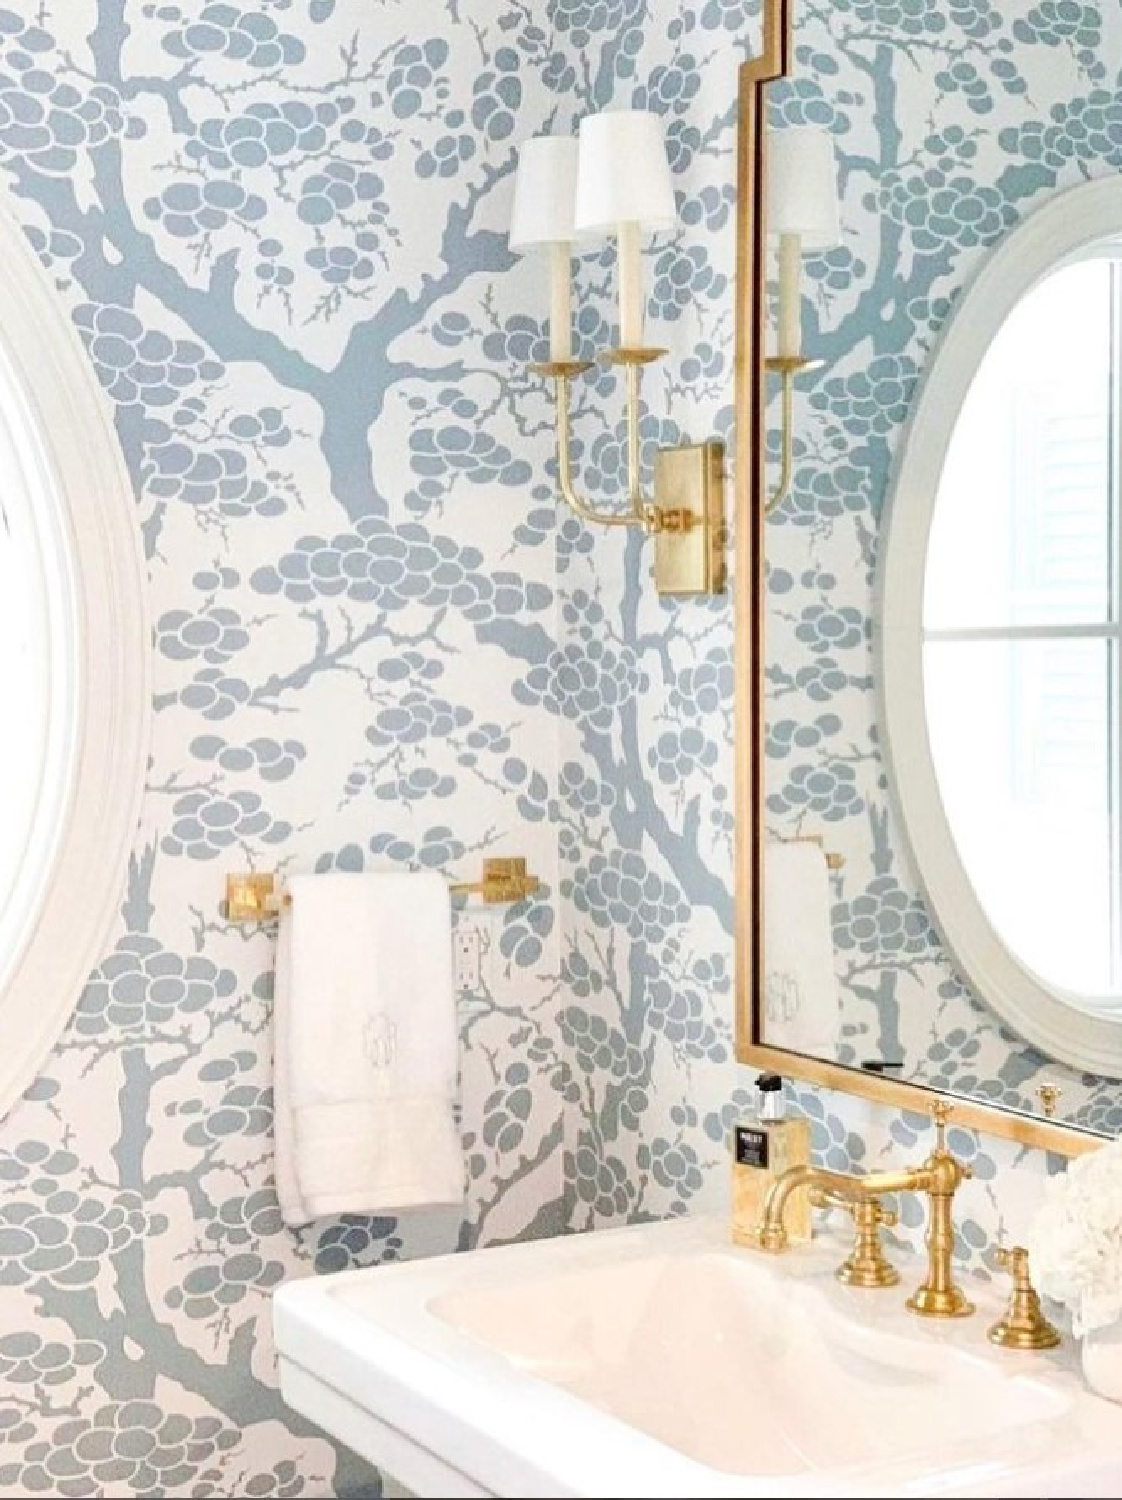 @msteffeninteriors - Beautiful classic wallpaper with blue in a bathroom. #bathroomdesign #bathroomwallpaper